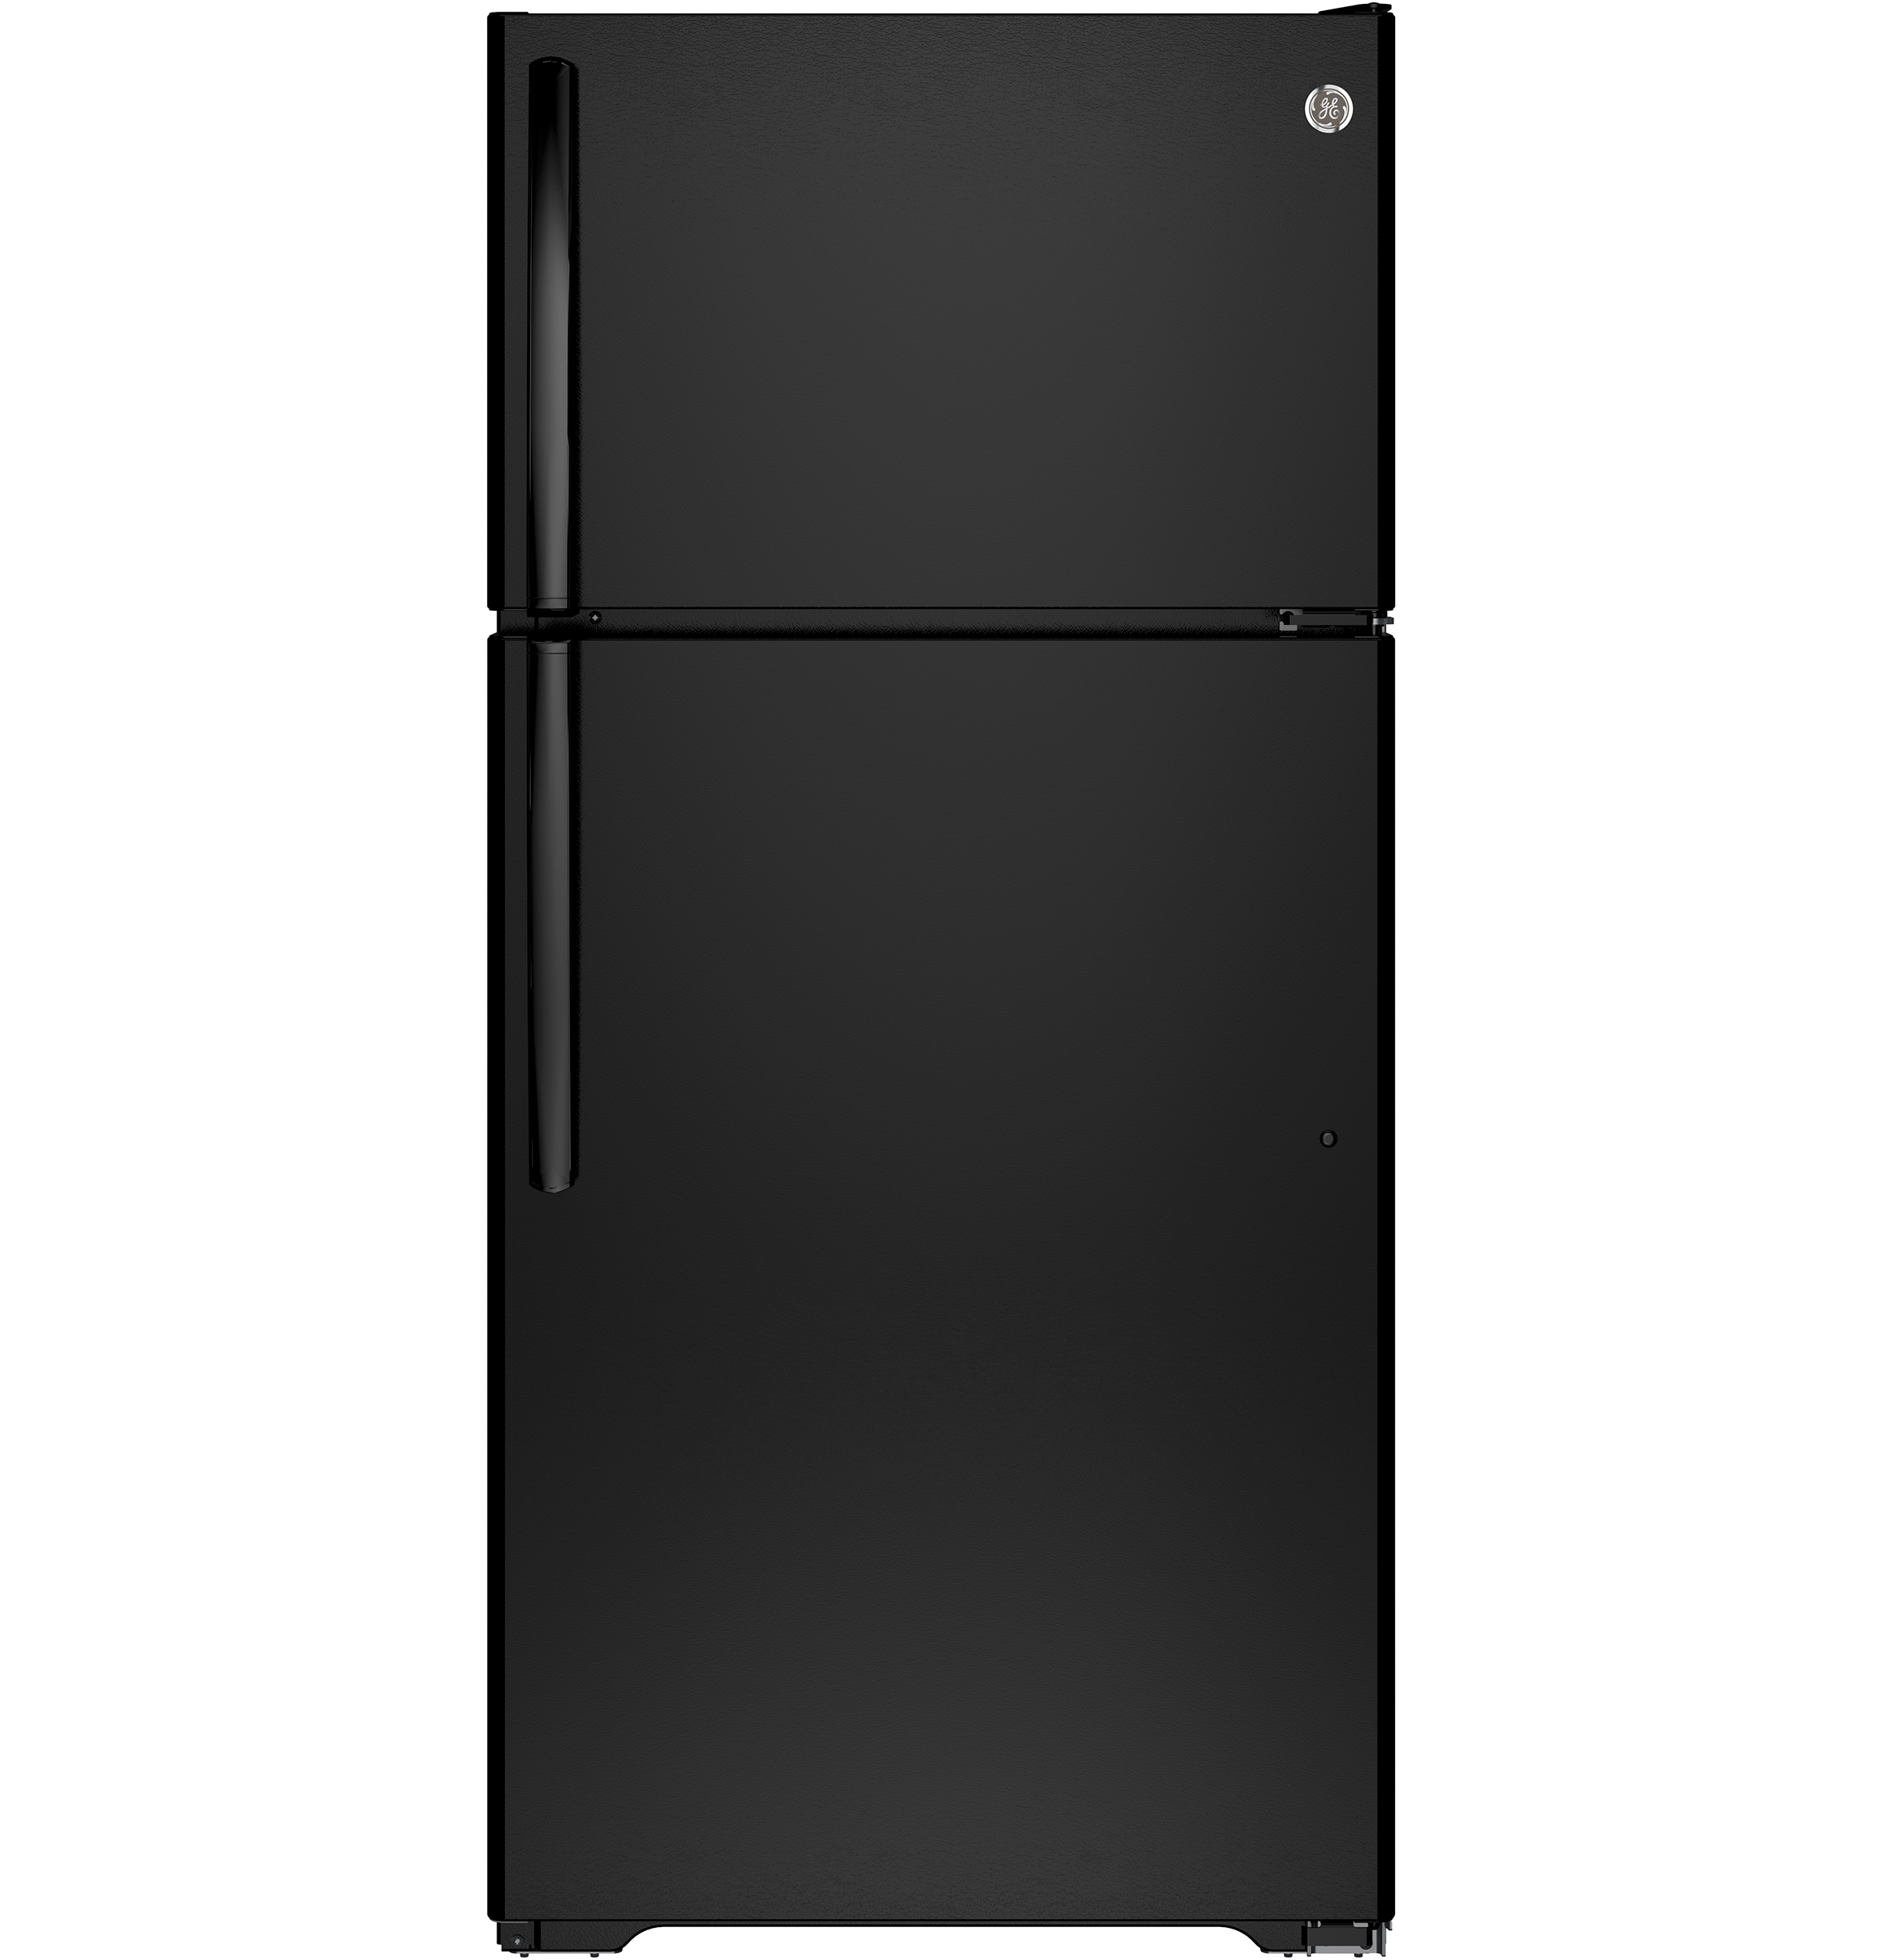 GE® ENERGY STAR® 14.6 Cu. Ft. Top-Freezer Refrigerator